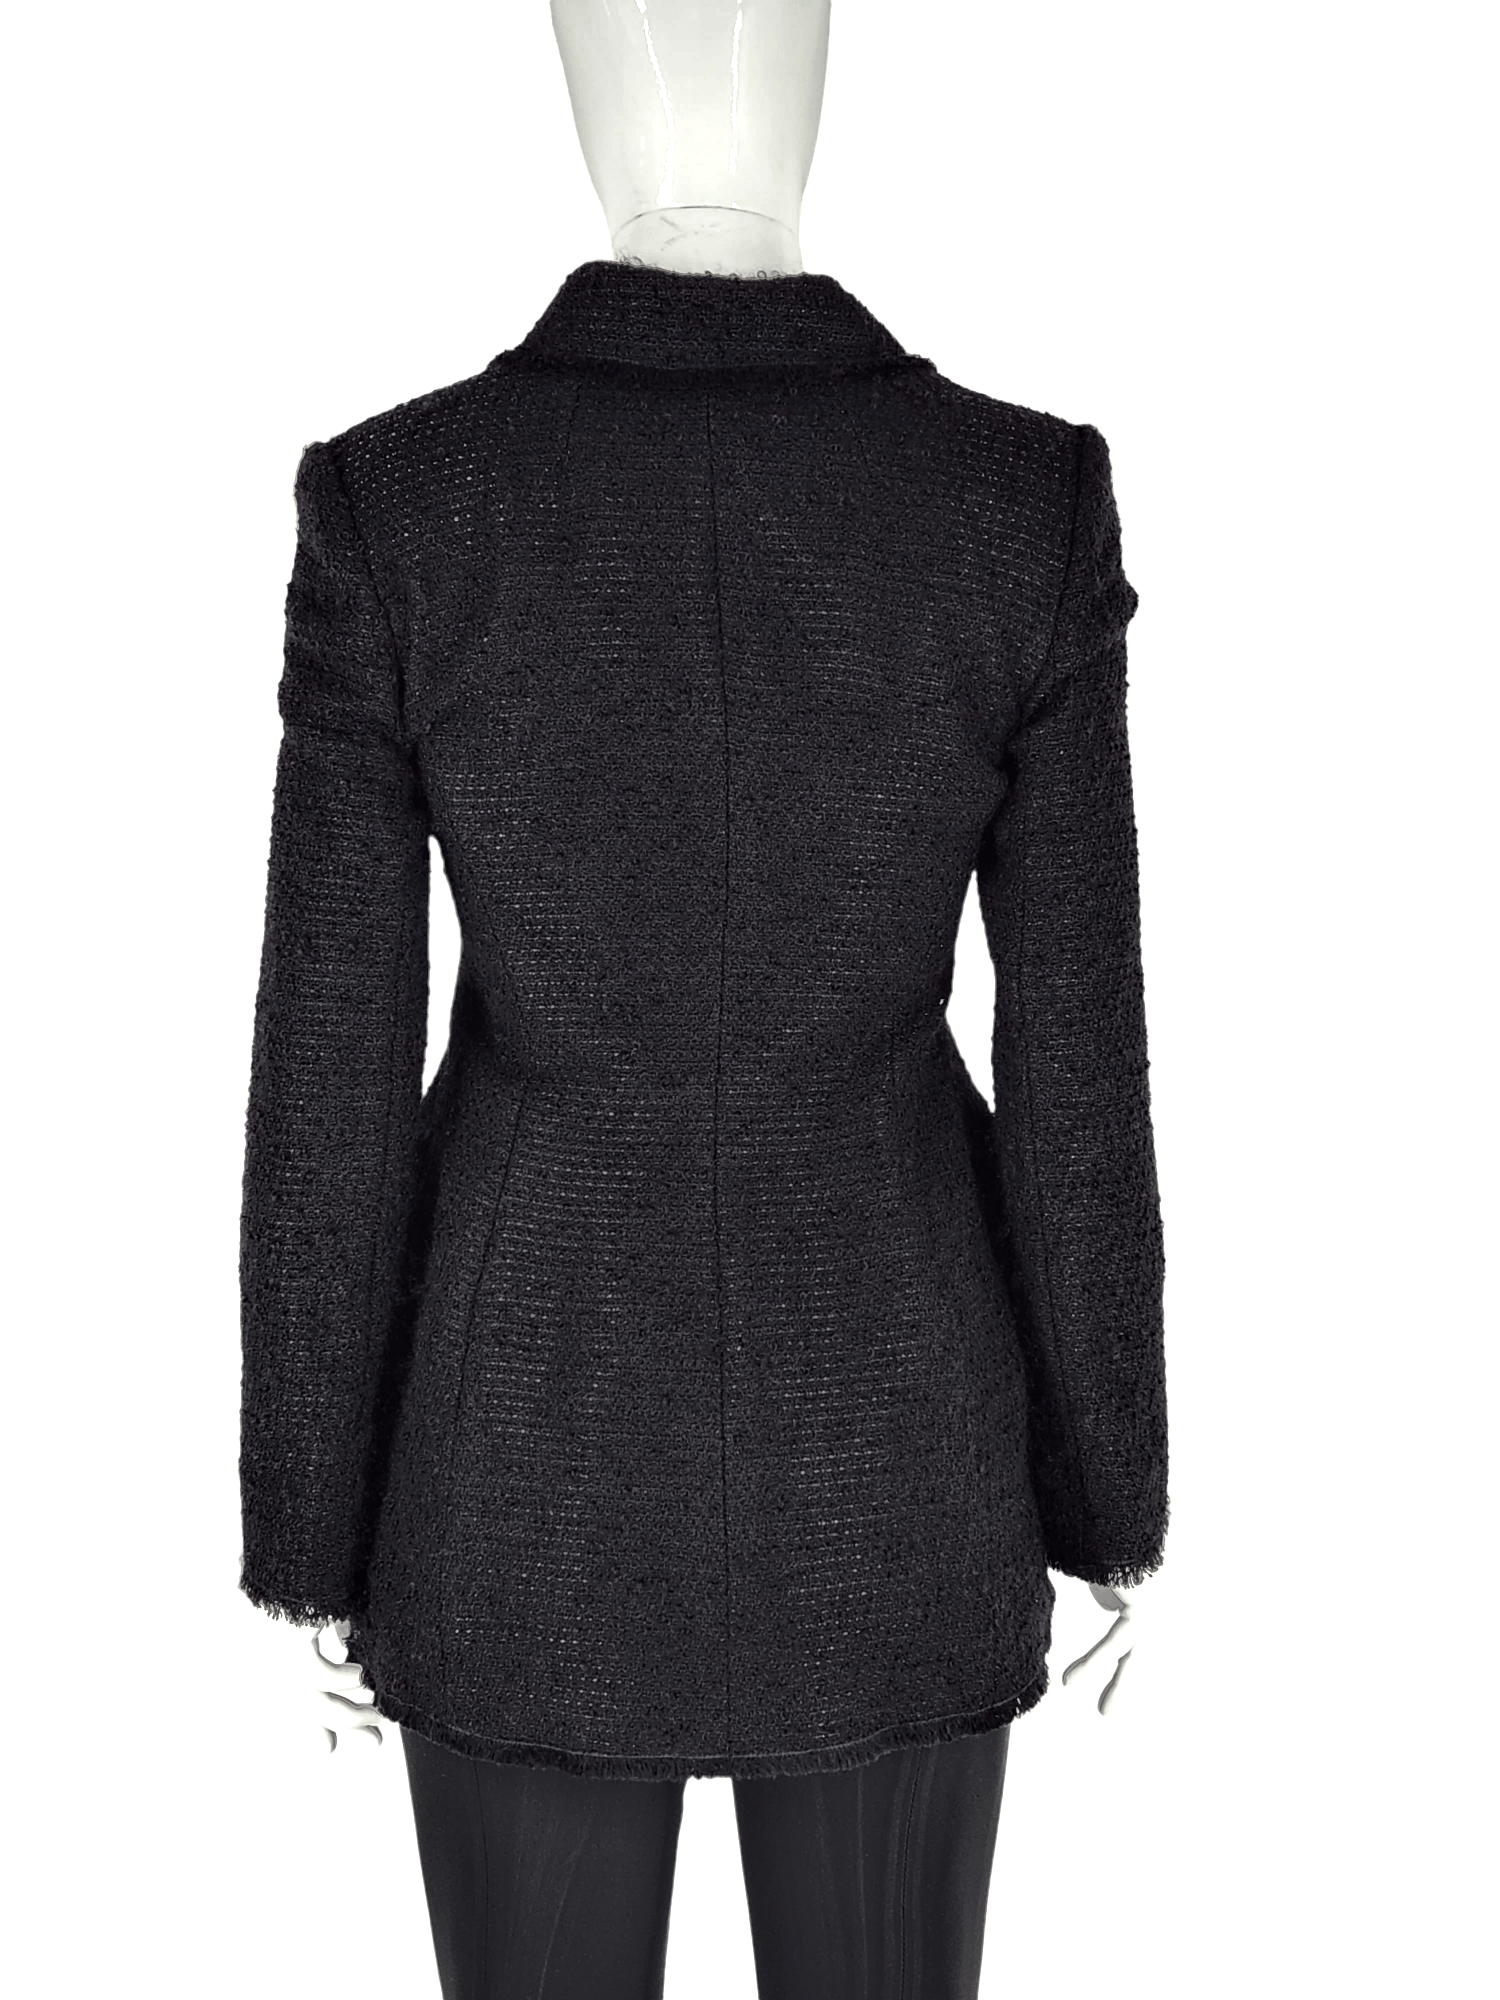 Dolce Gabbana Black Tweed Blazer Jacket IT40